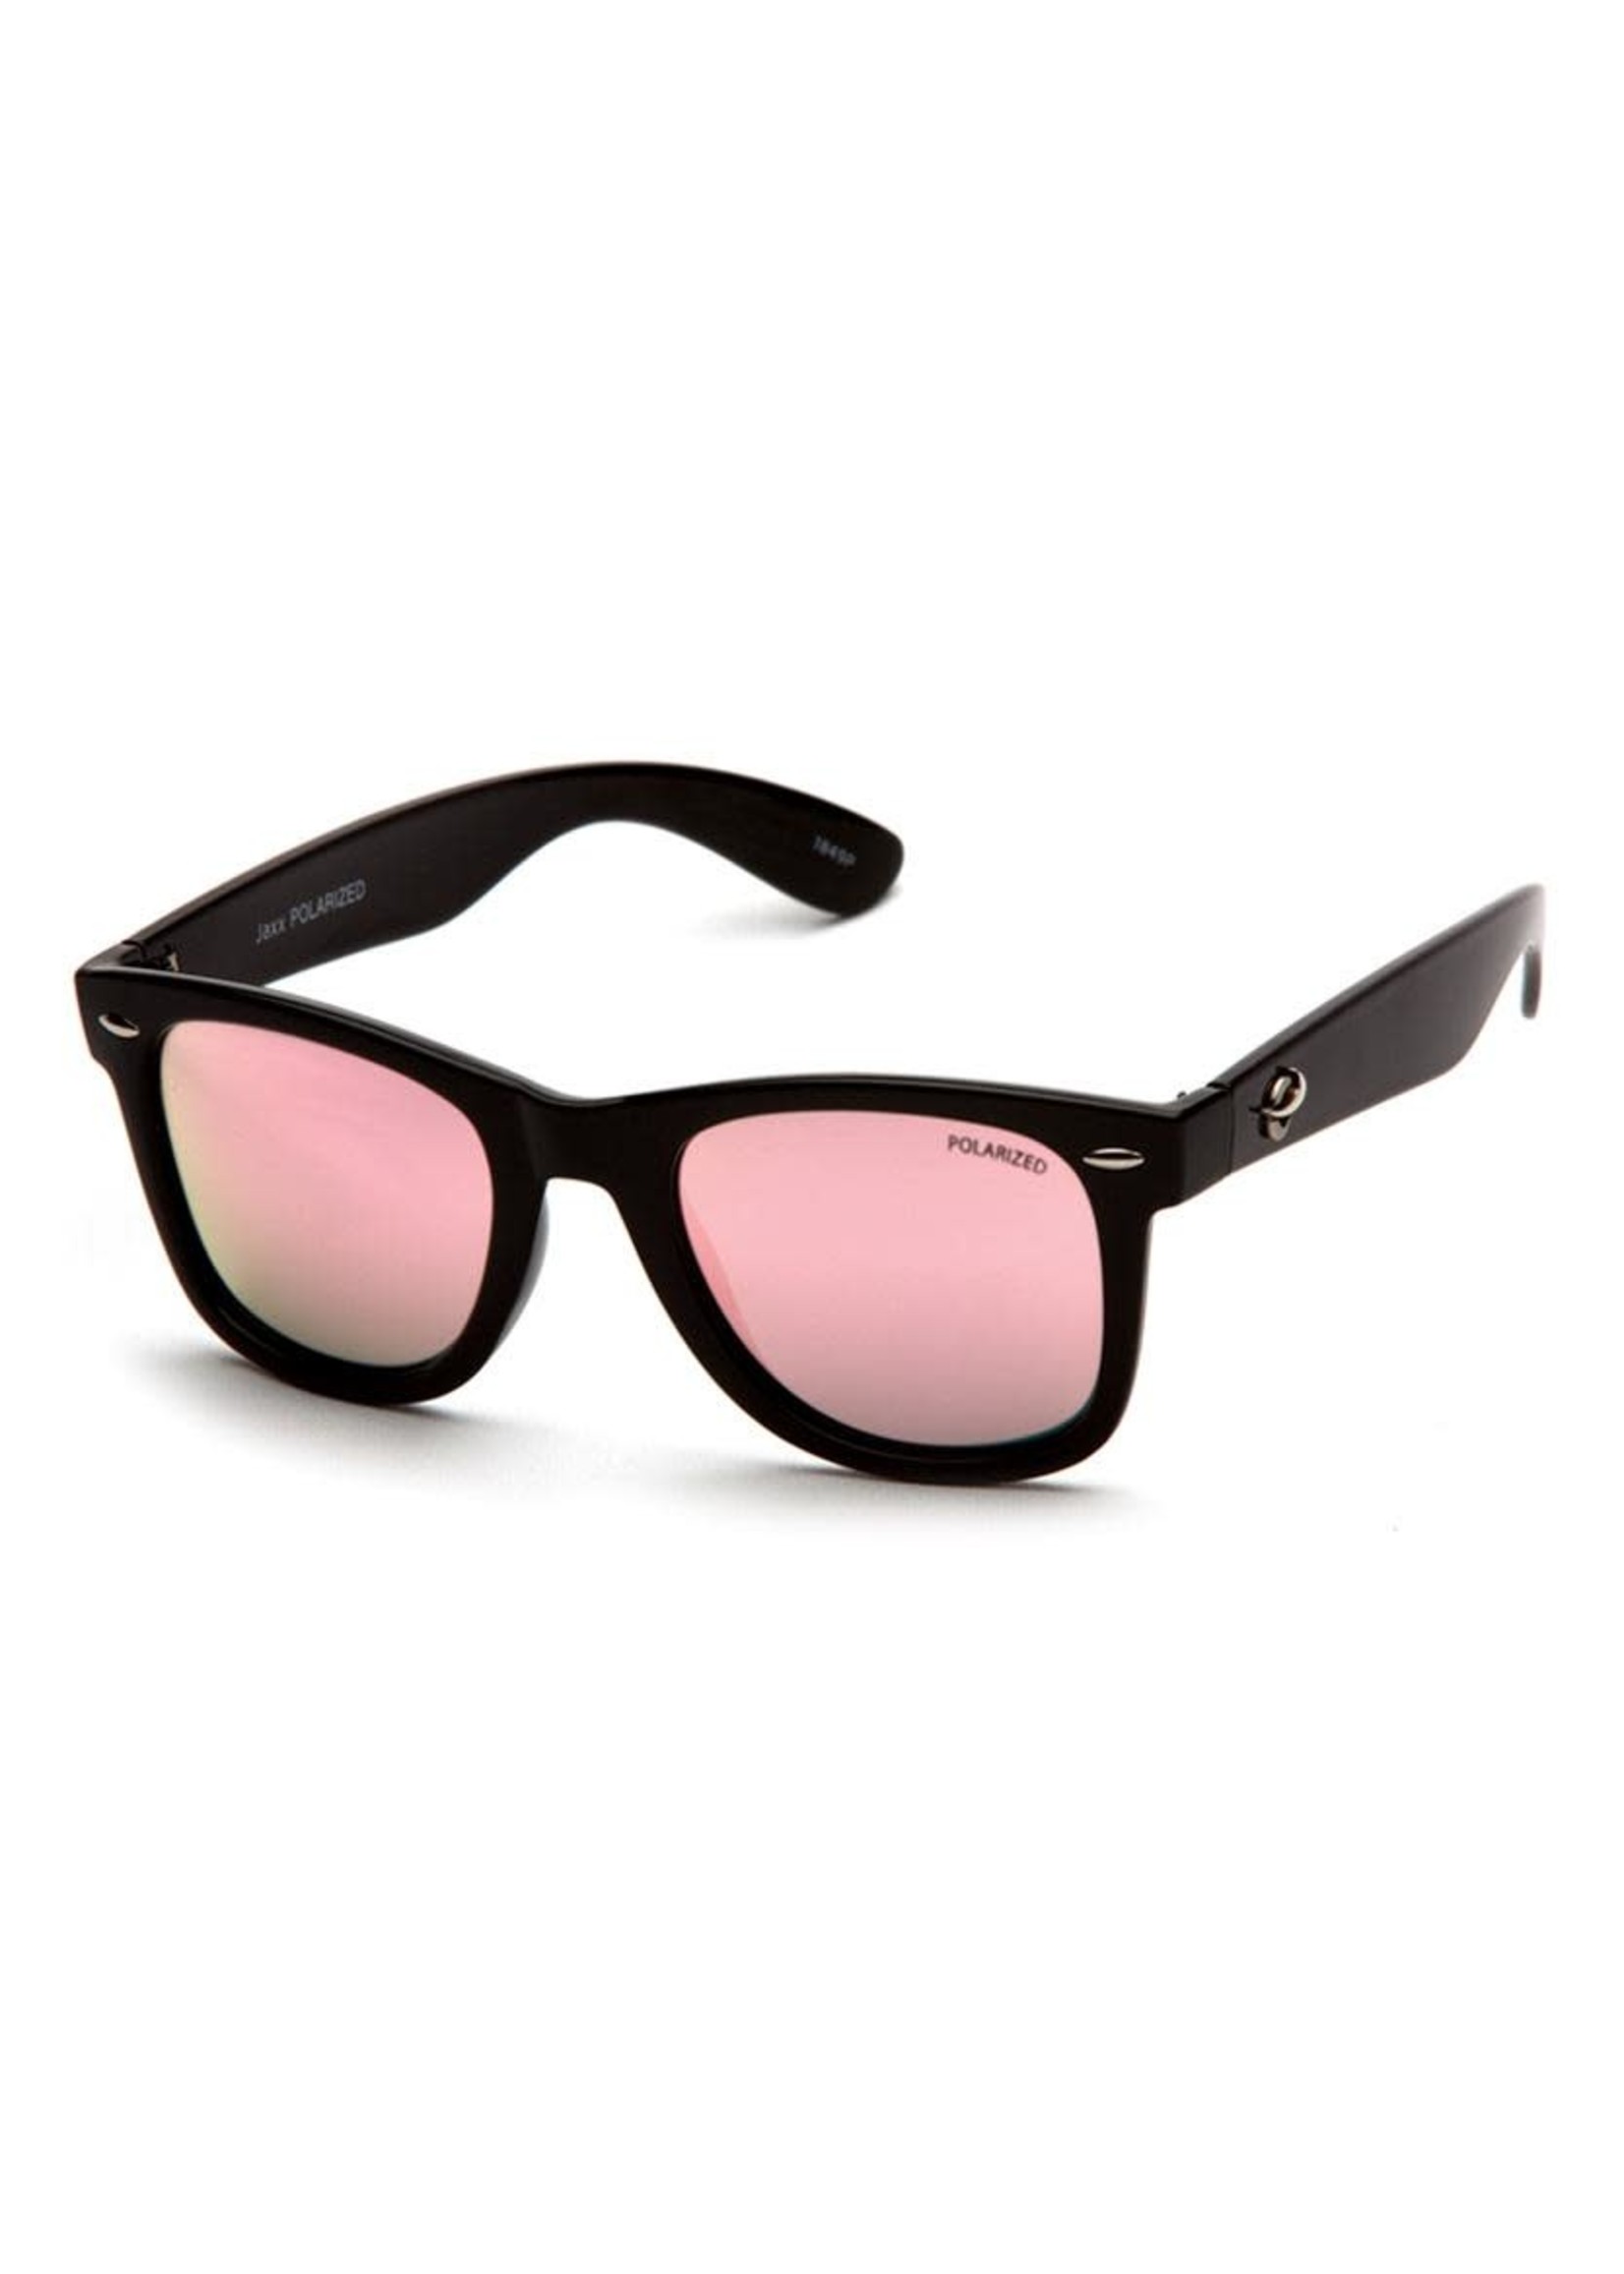 Urban Element Urban Element Premium Sport Sunglasses Women   POLARIZED's Jaxx